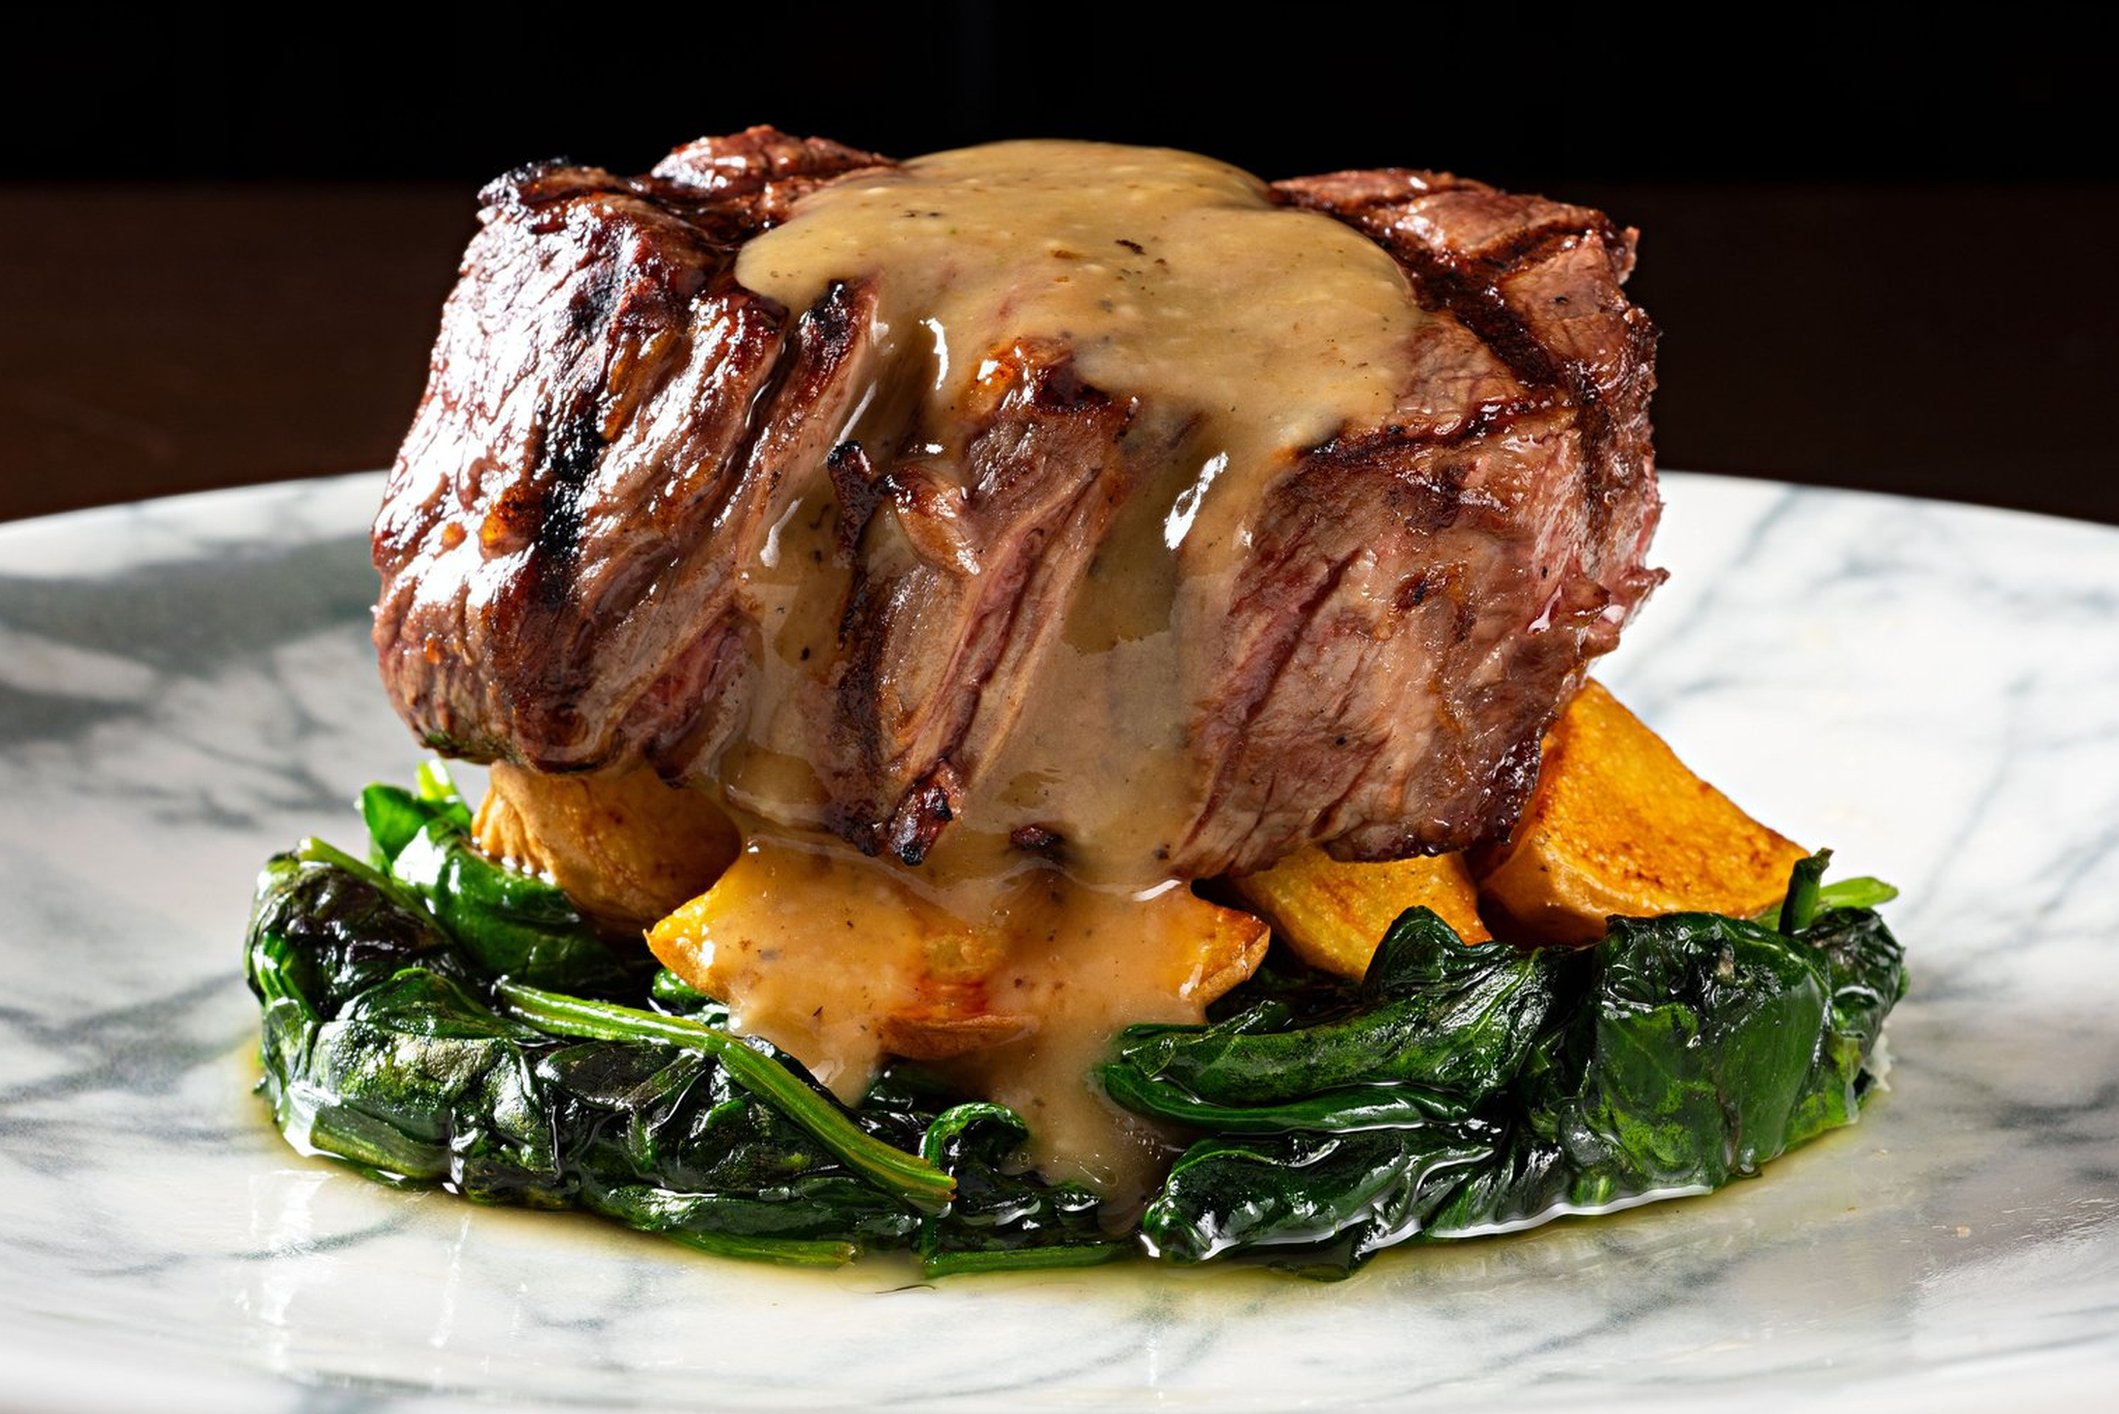 A fillet steak on a plate